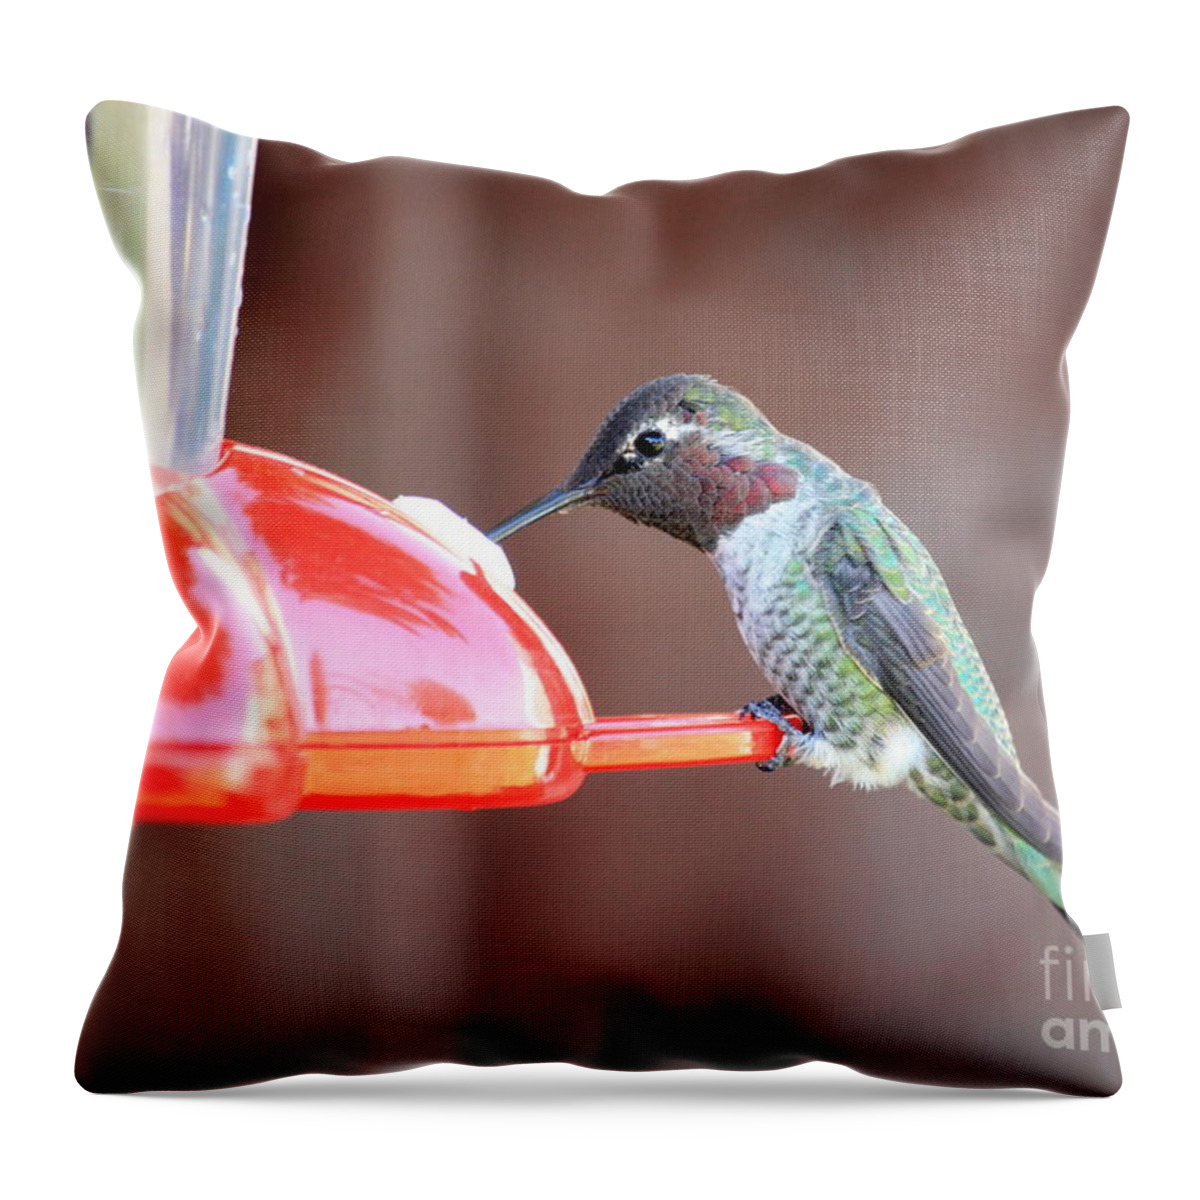 Hummingbird Throw Pillow featuring the photograph Feeding Hummingbird by Carol Groenen